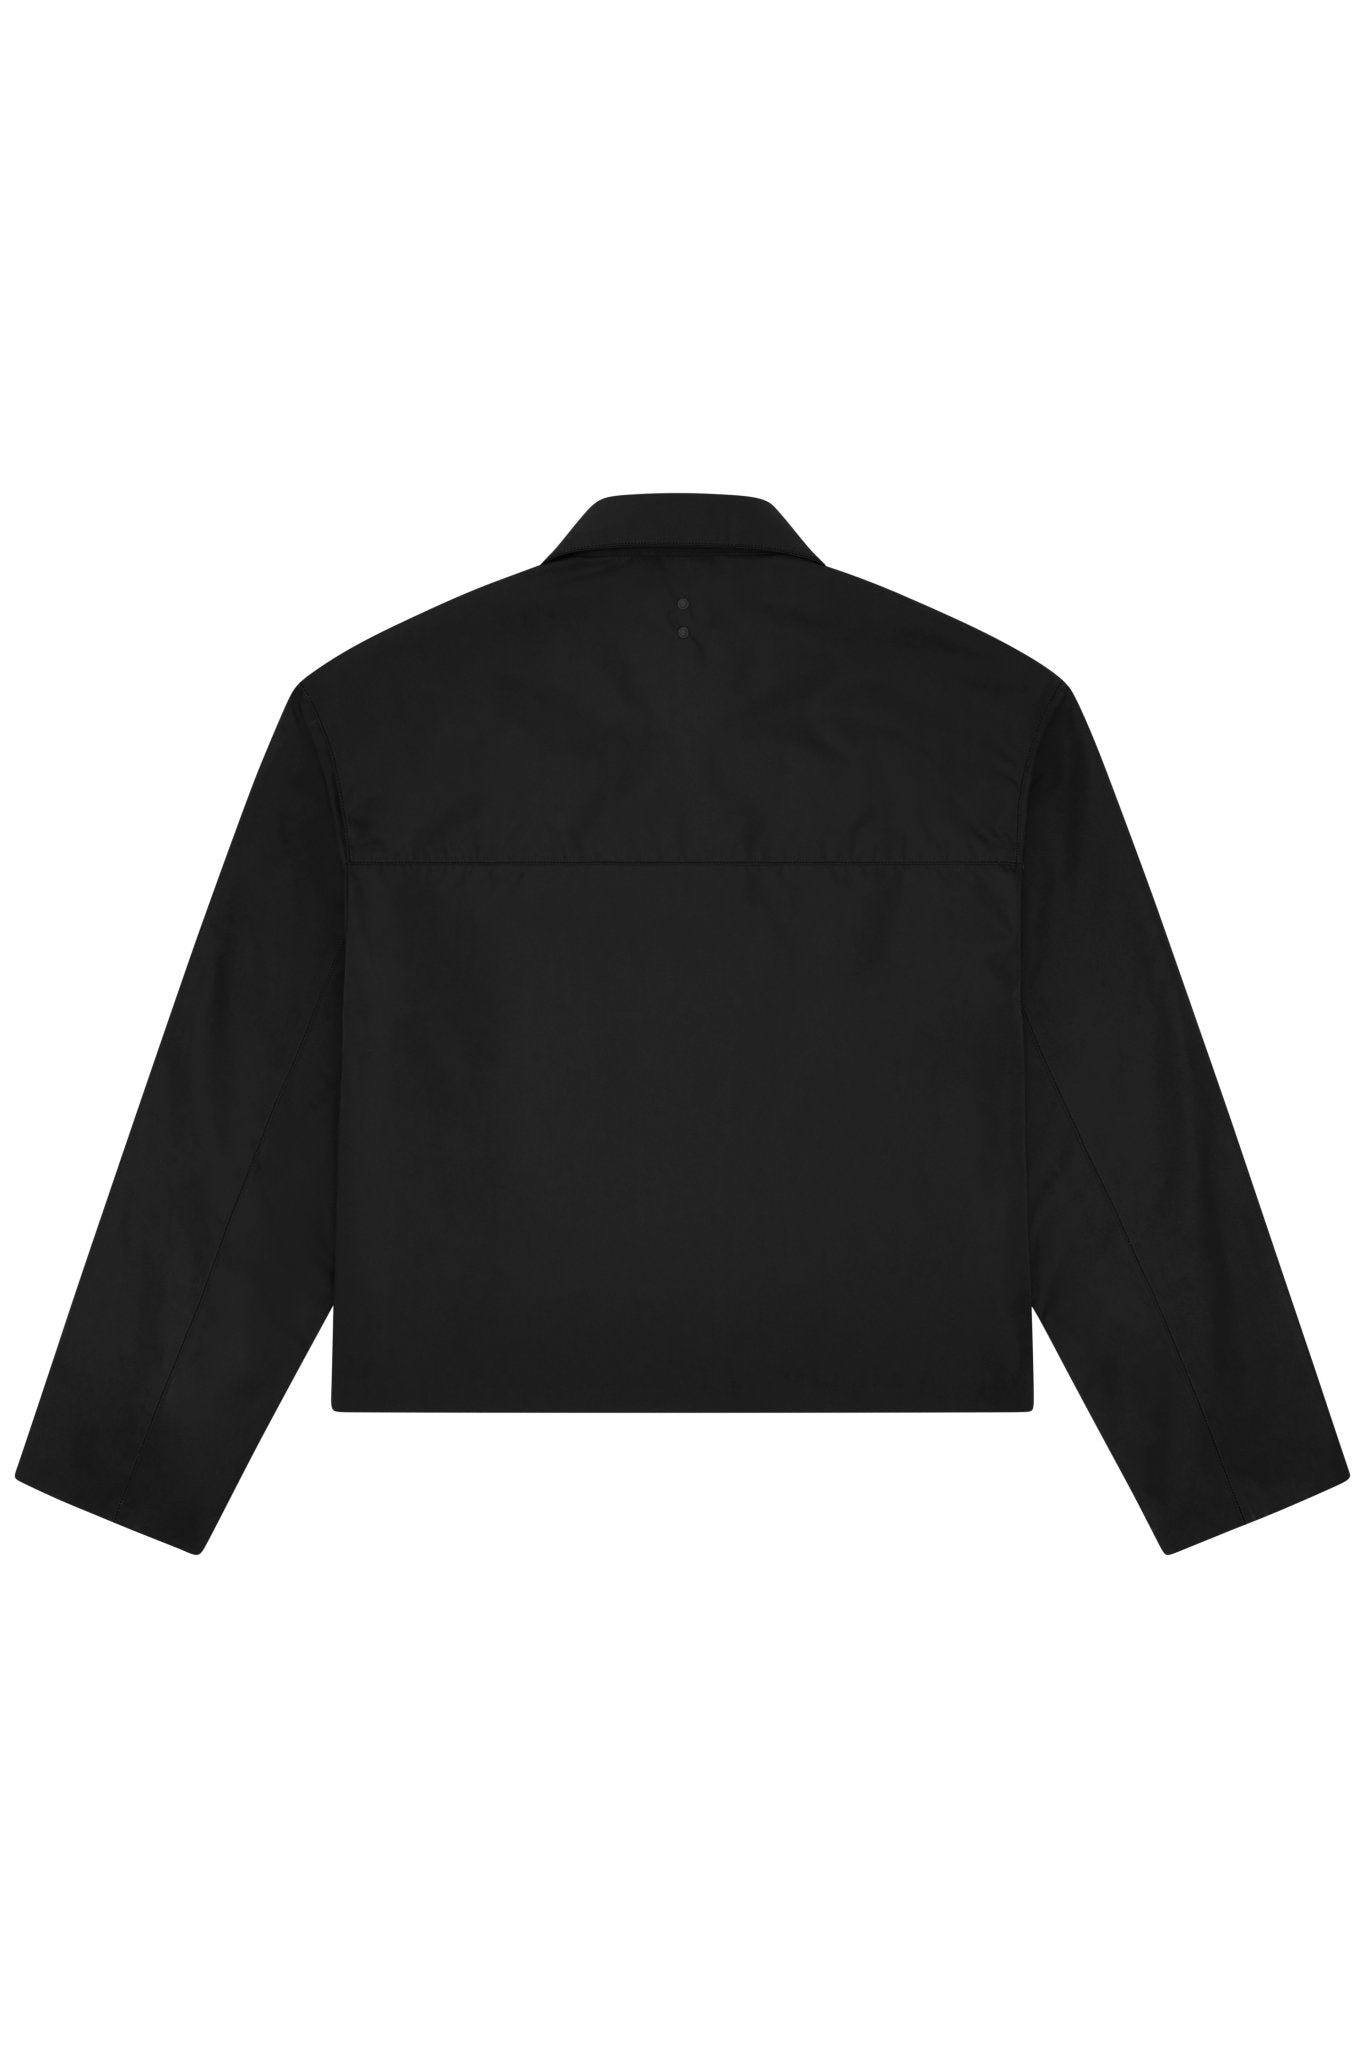 about---blank.comcropped jacket black